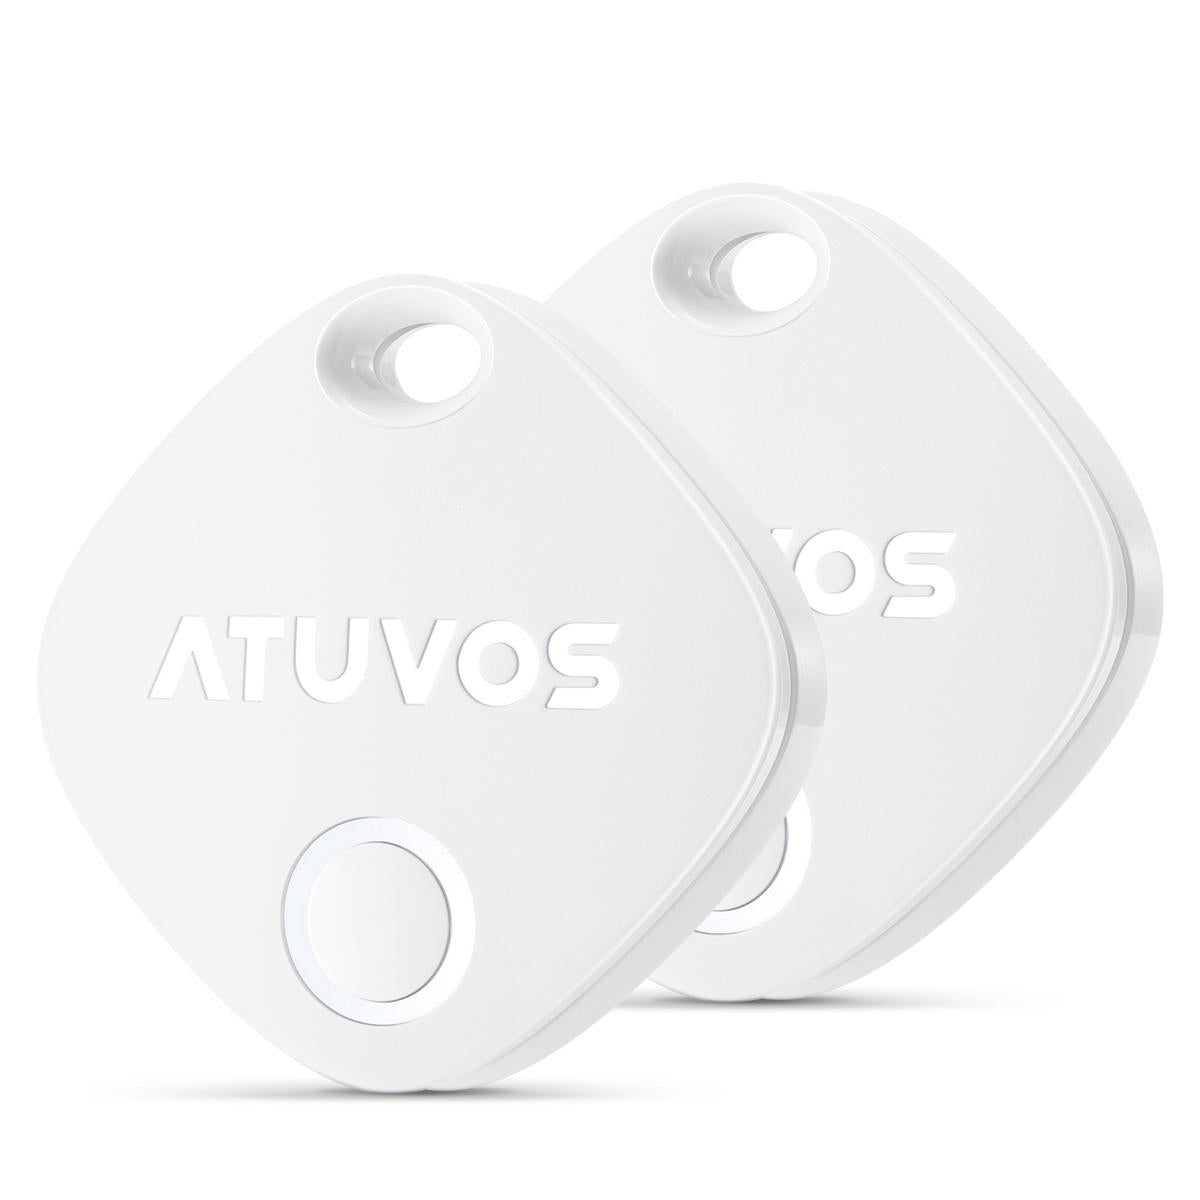 ATUVOS White Versatile Tracker 2PCS